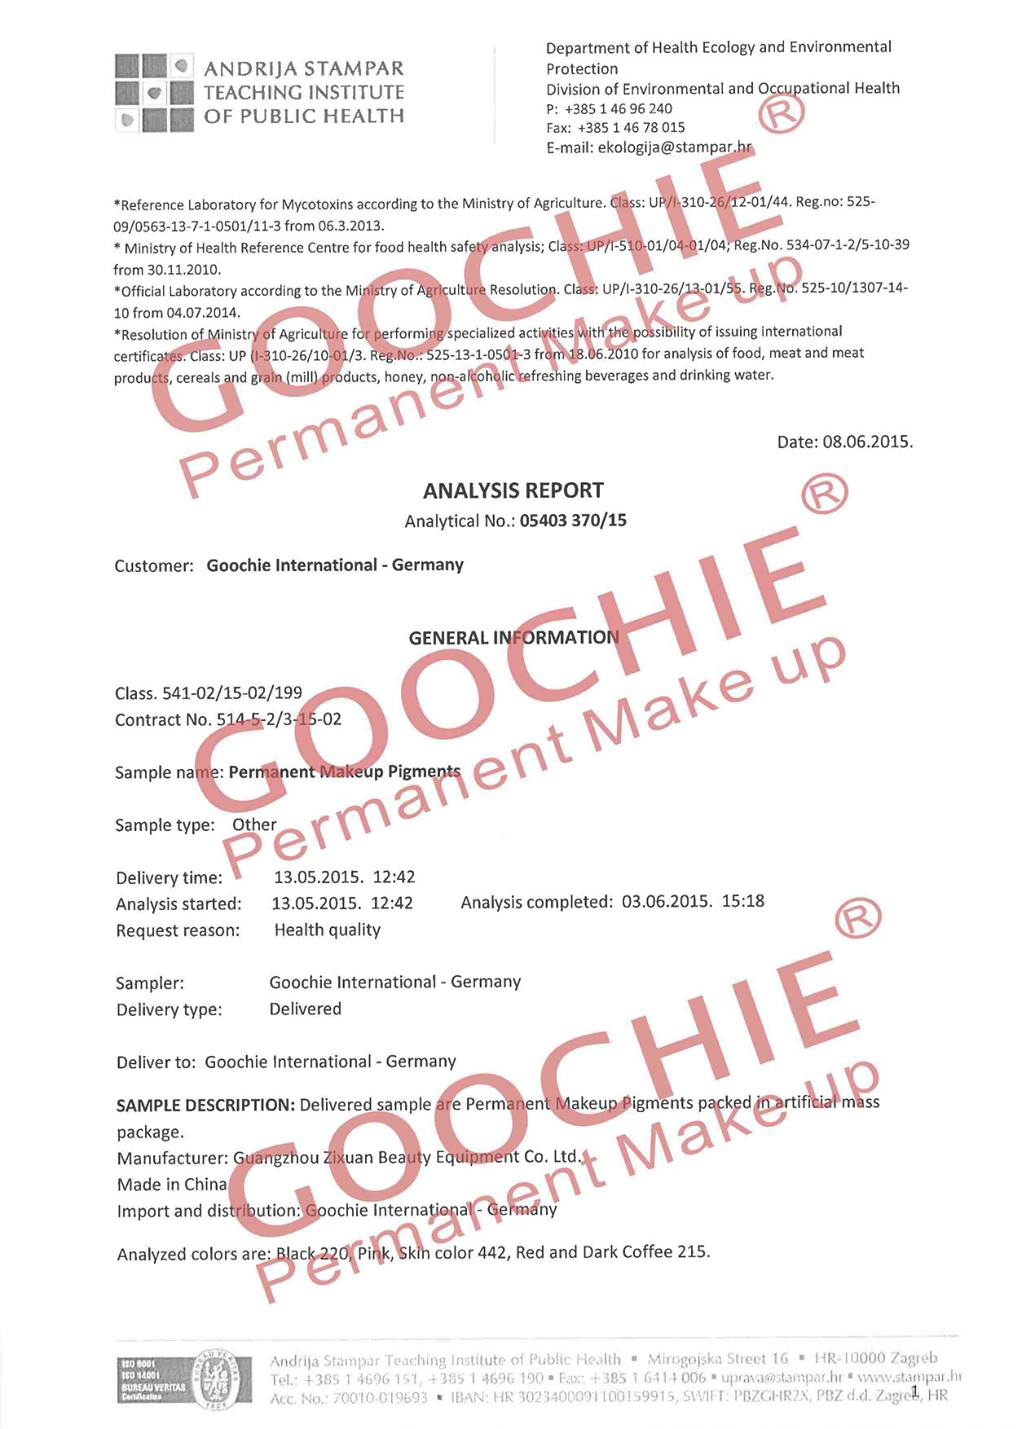 Goochie Pigment Analysis